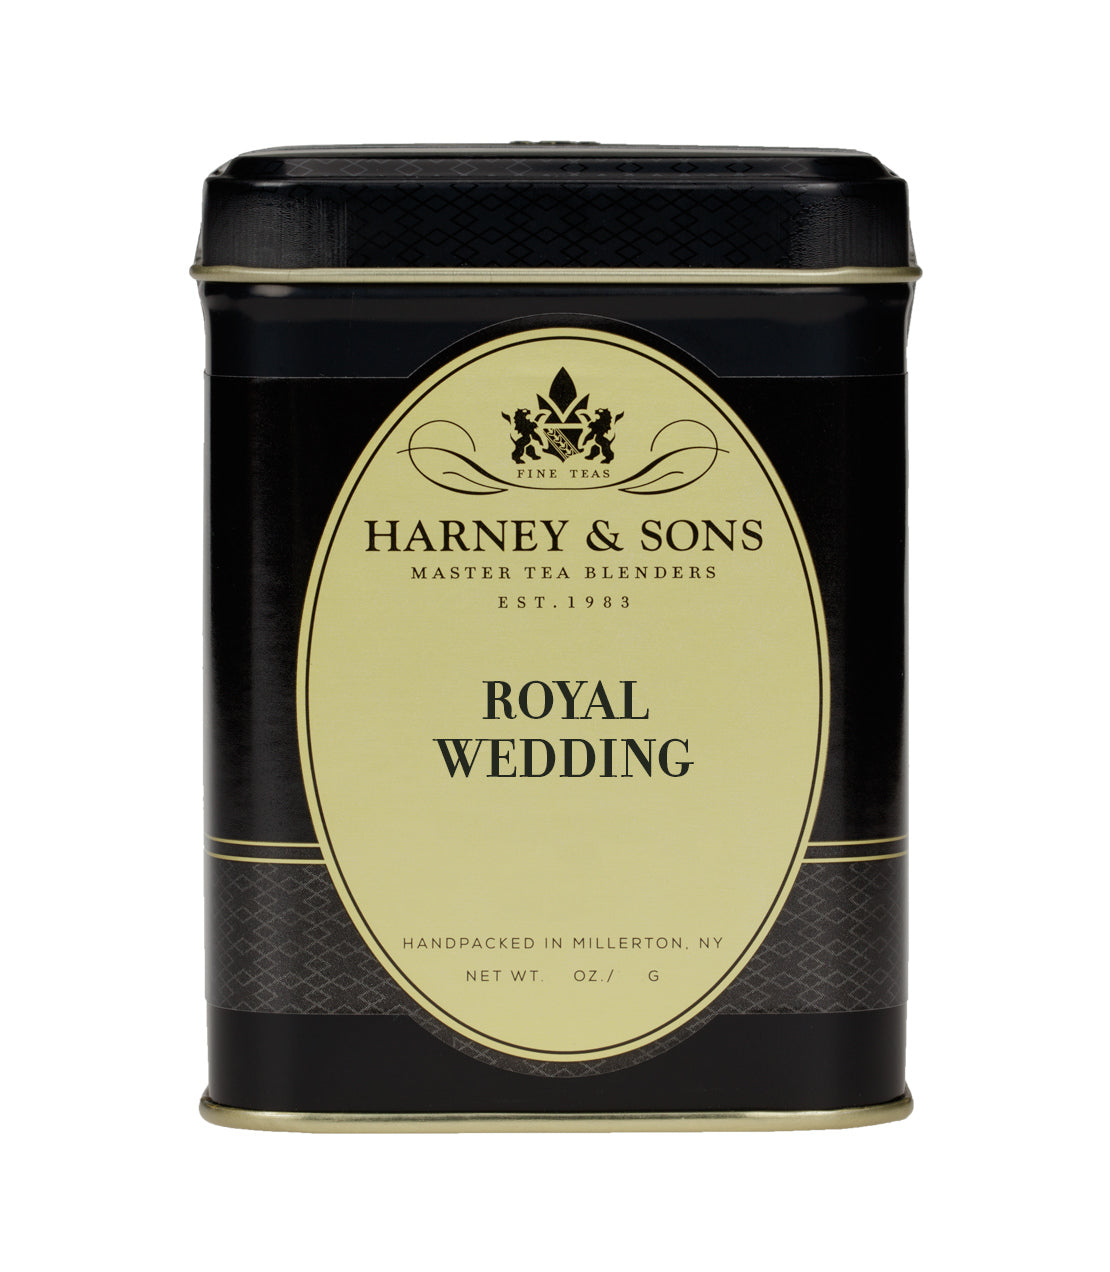 Royal Wedding Tea - Loose 2 oz. Tin - Harney & Sons Fine Teas